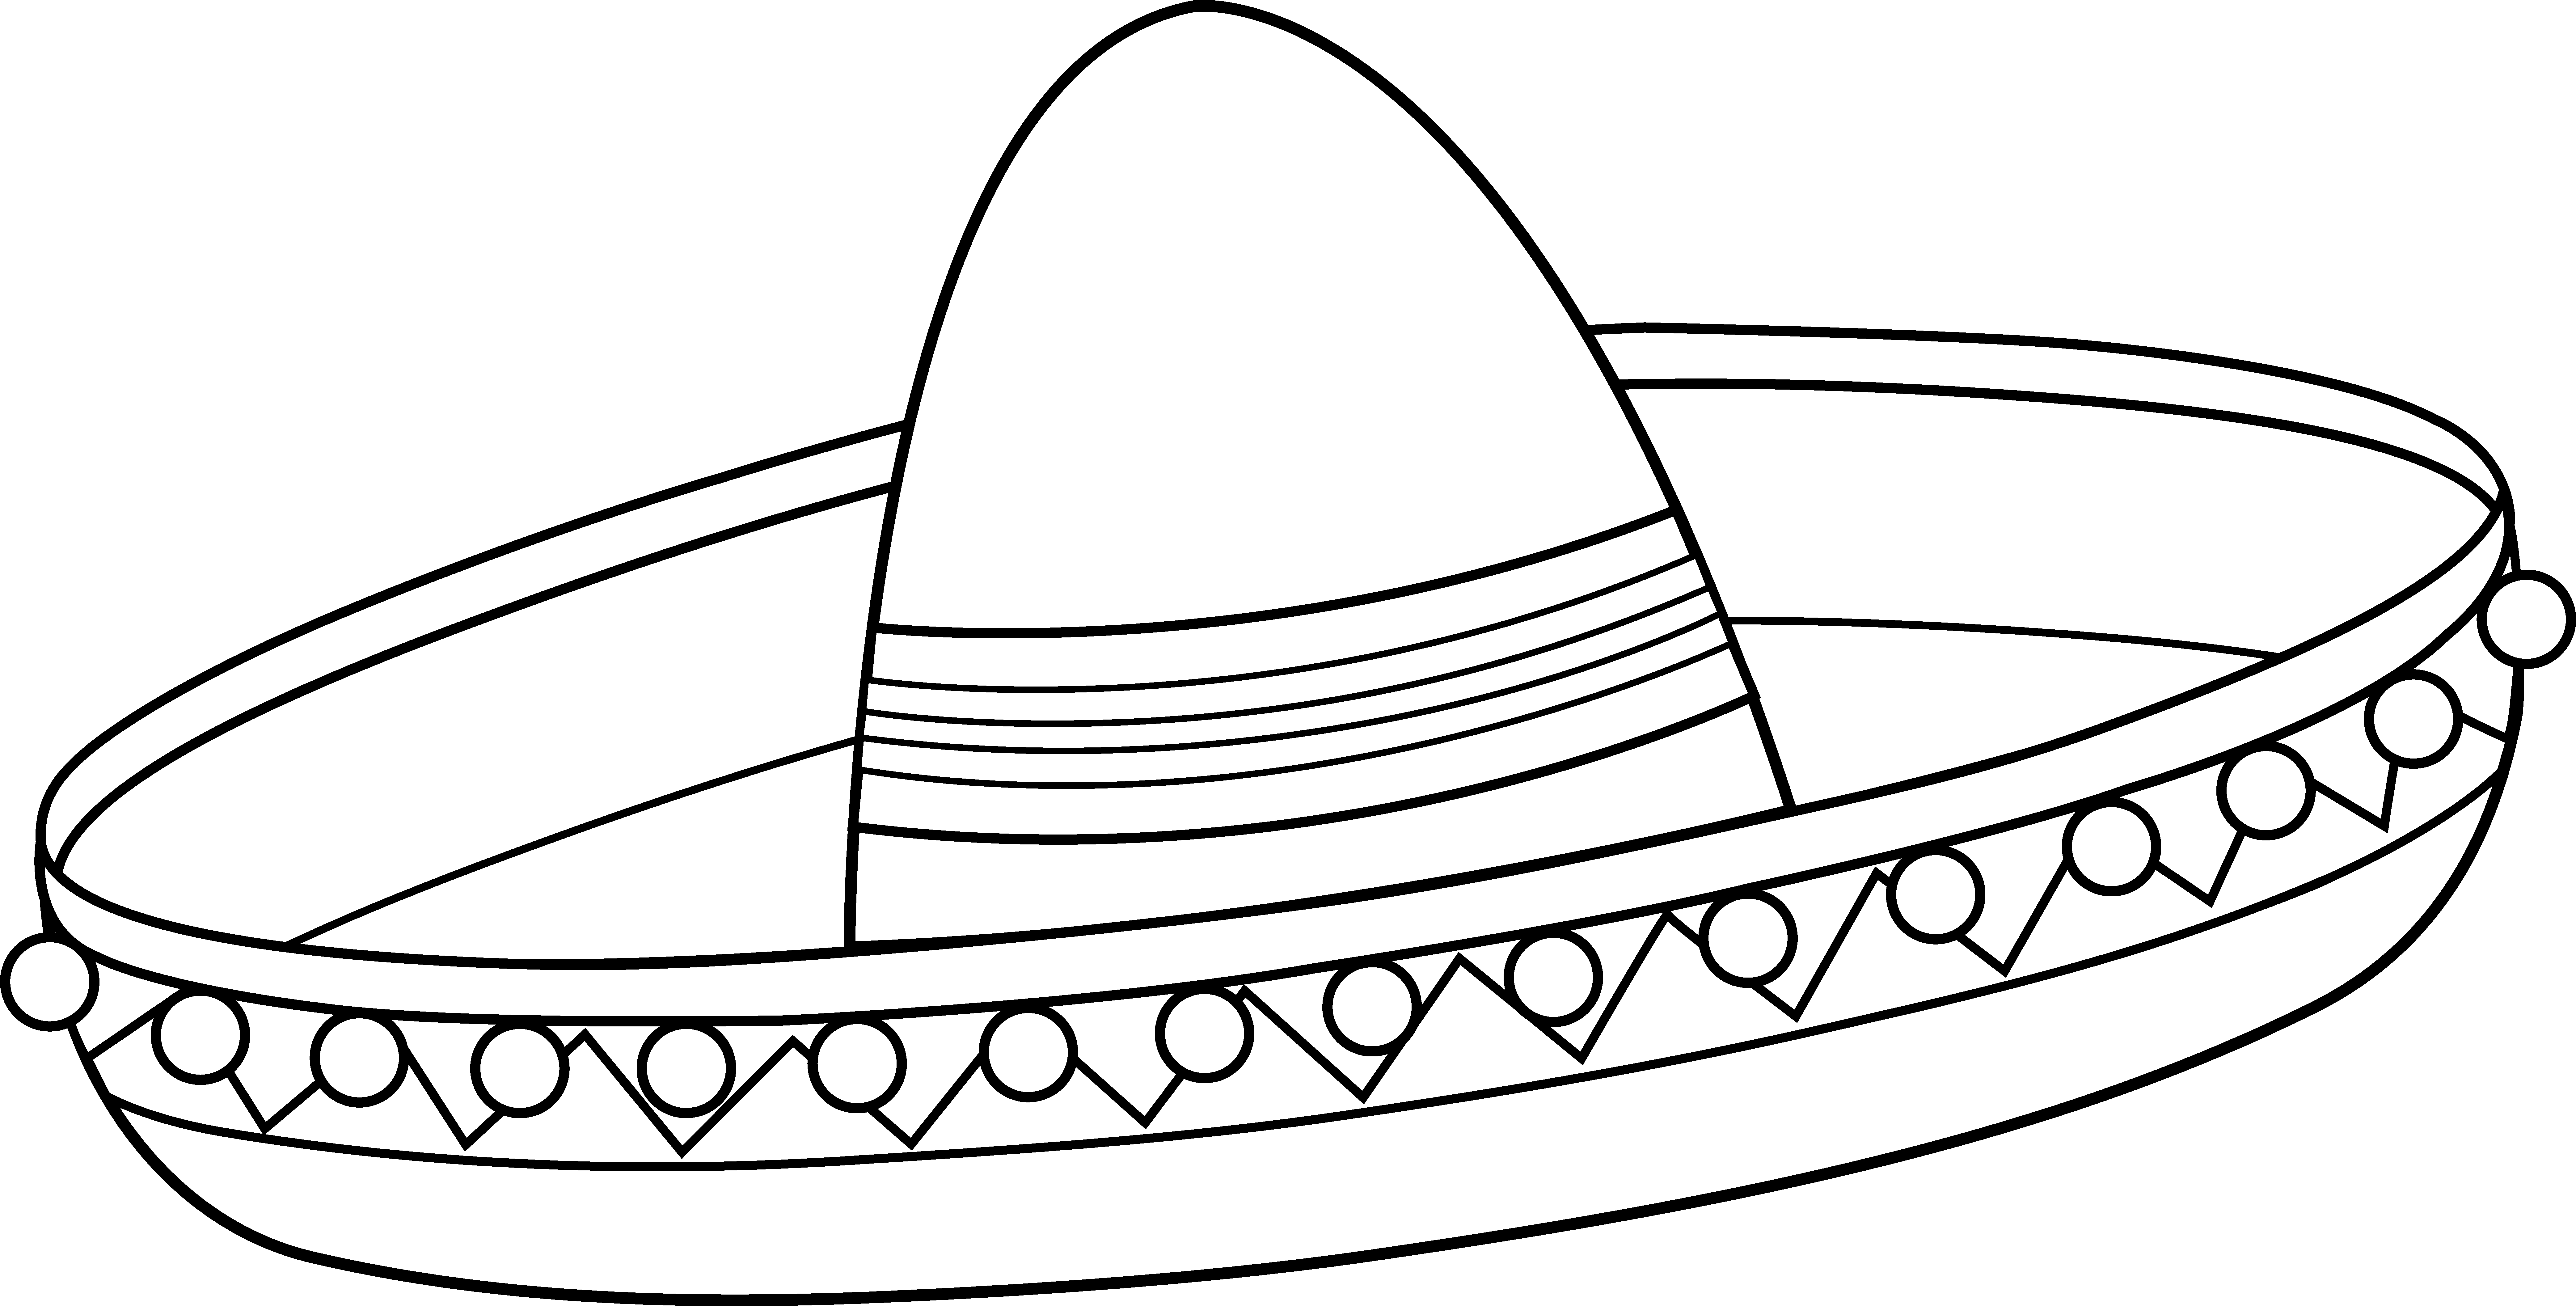 Mexican Sombrero Line Art - Free Clip Art